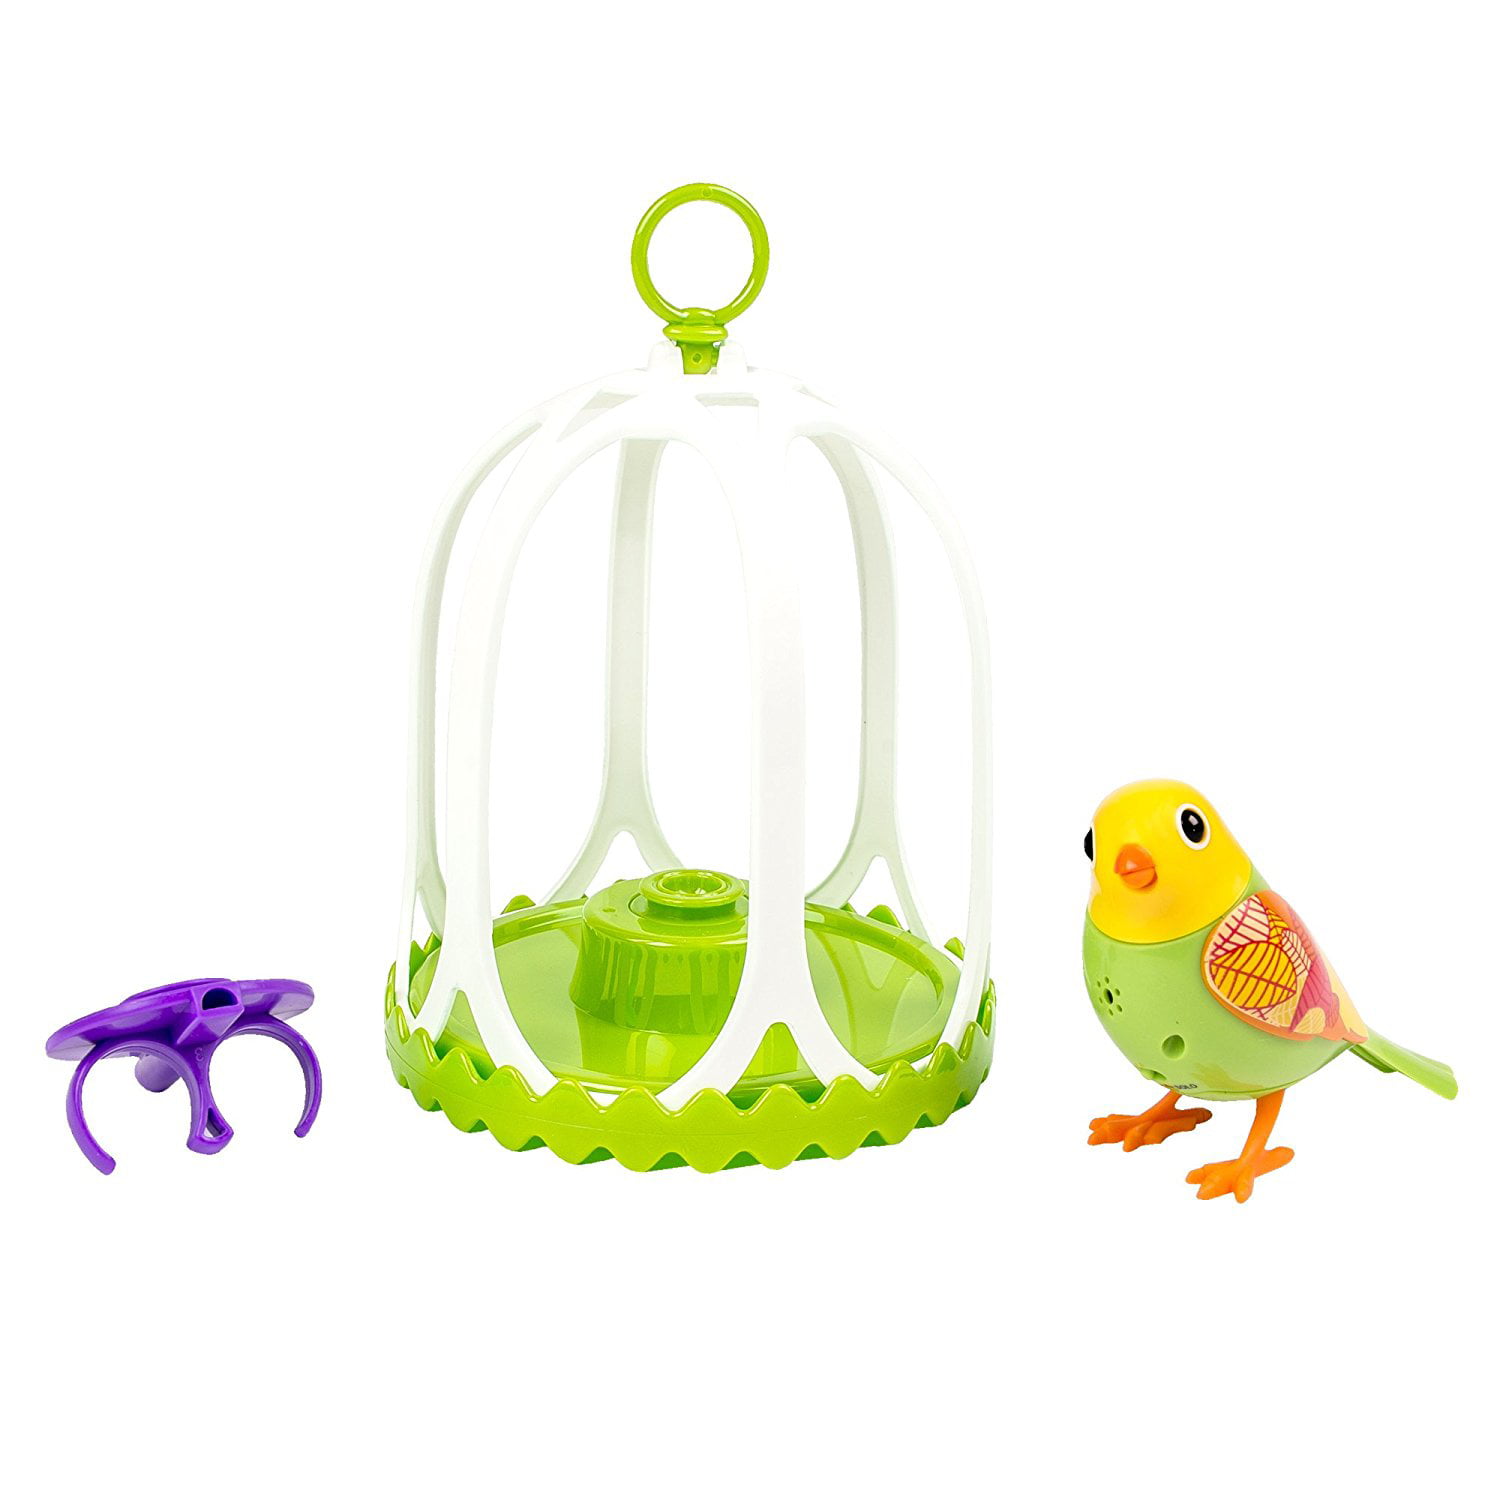 Songbird 1 Bird Water Whistles Musical toy for kids 100% real bird singing Songbirds 